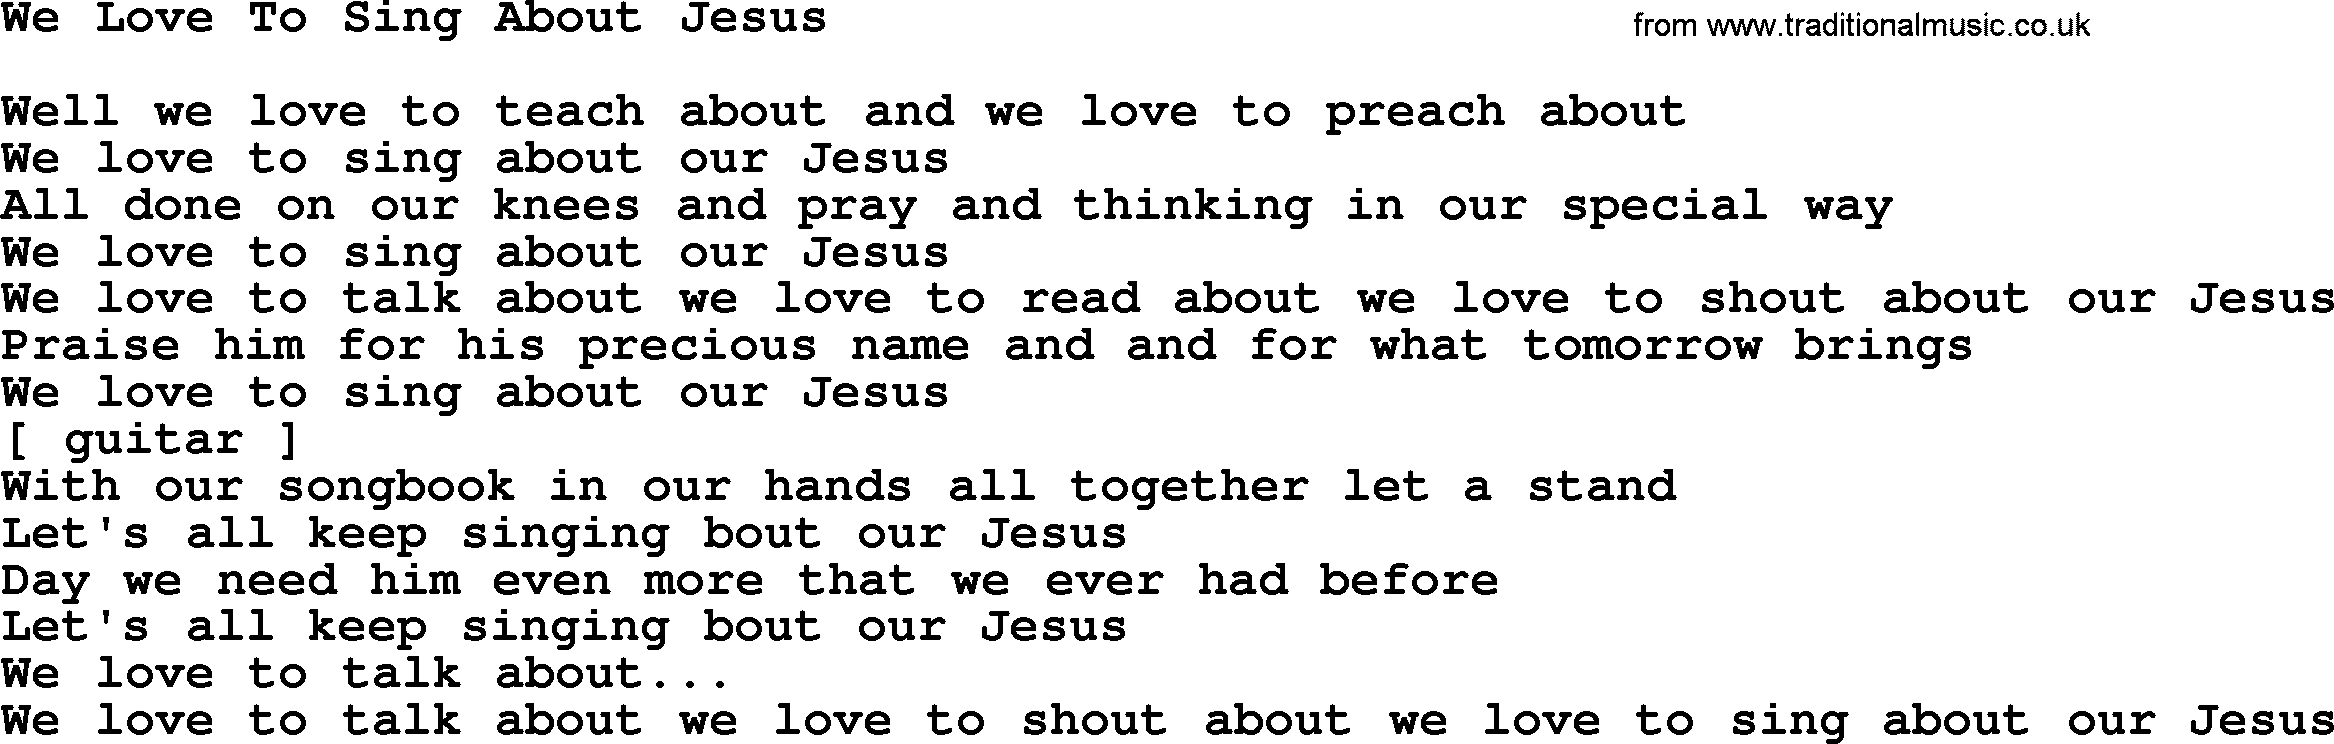 George Jones song: We Love To Sing About Jesus, lyrics